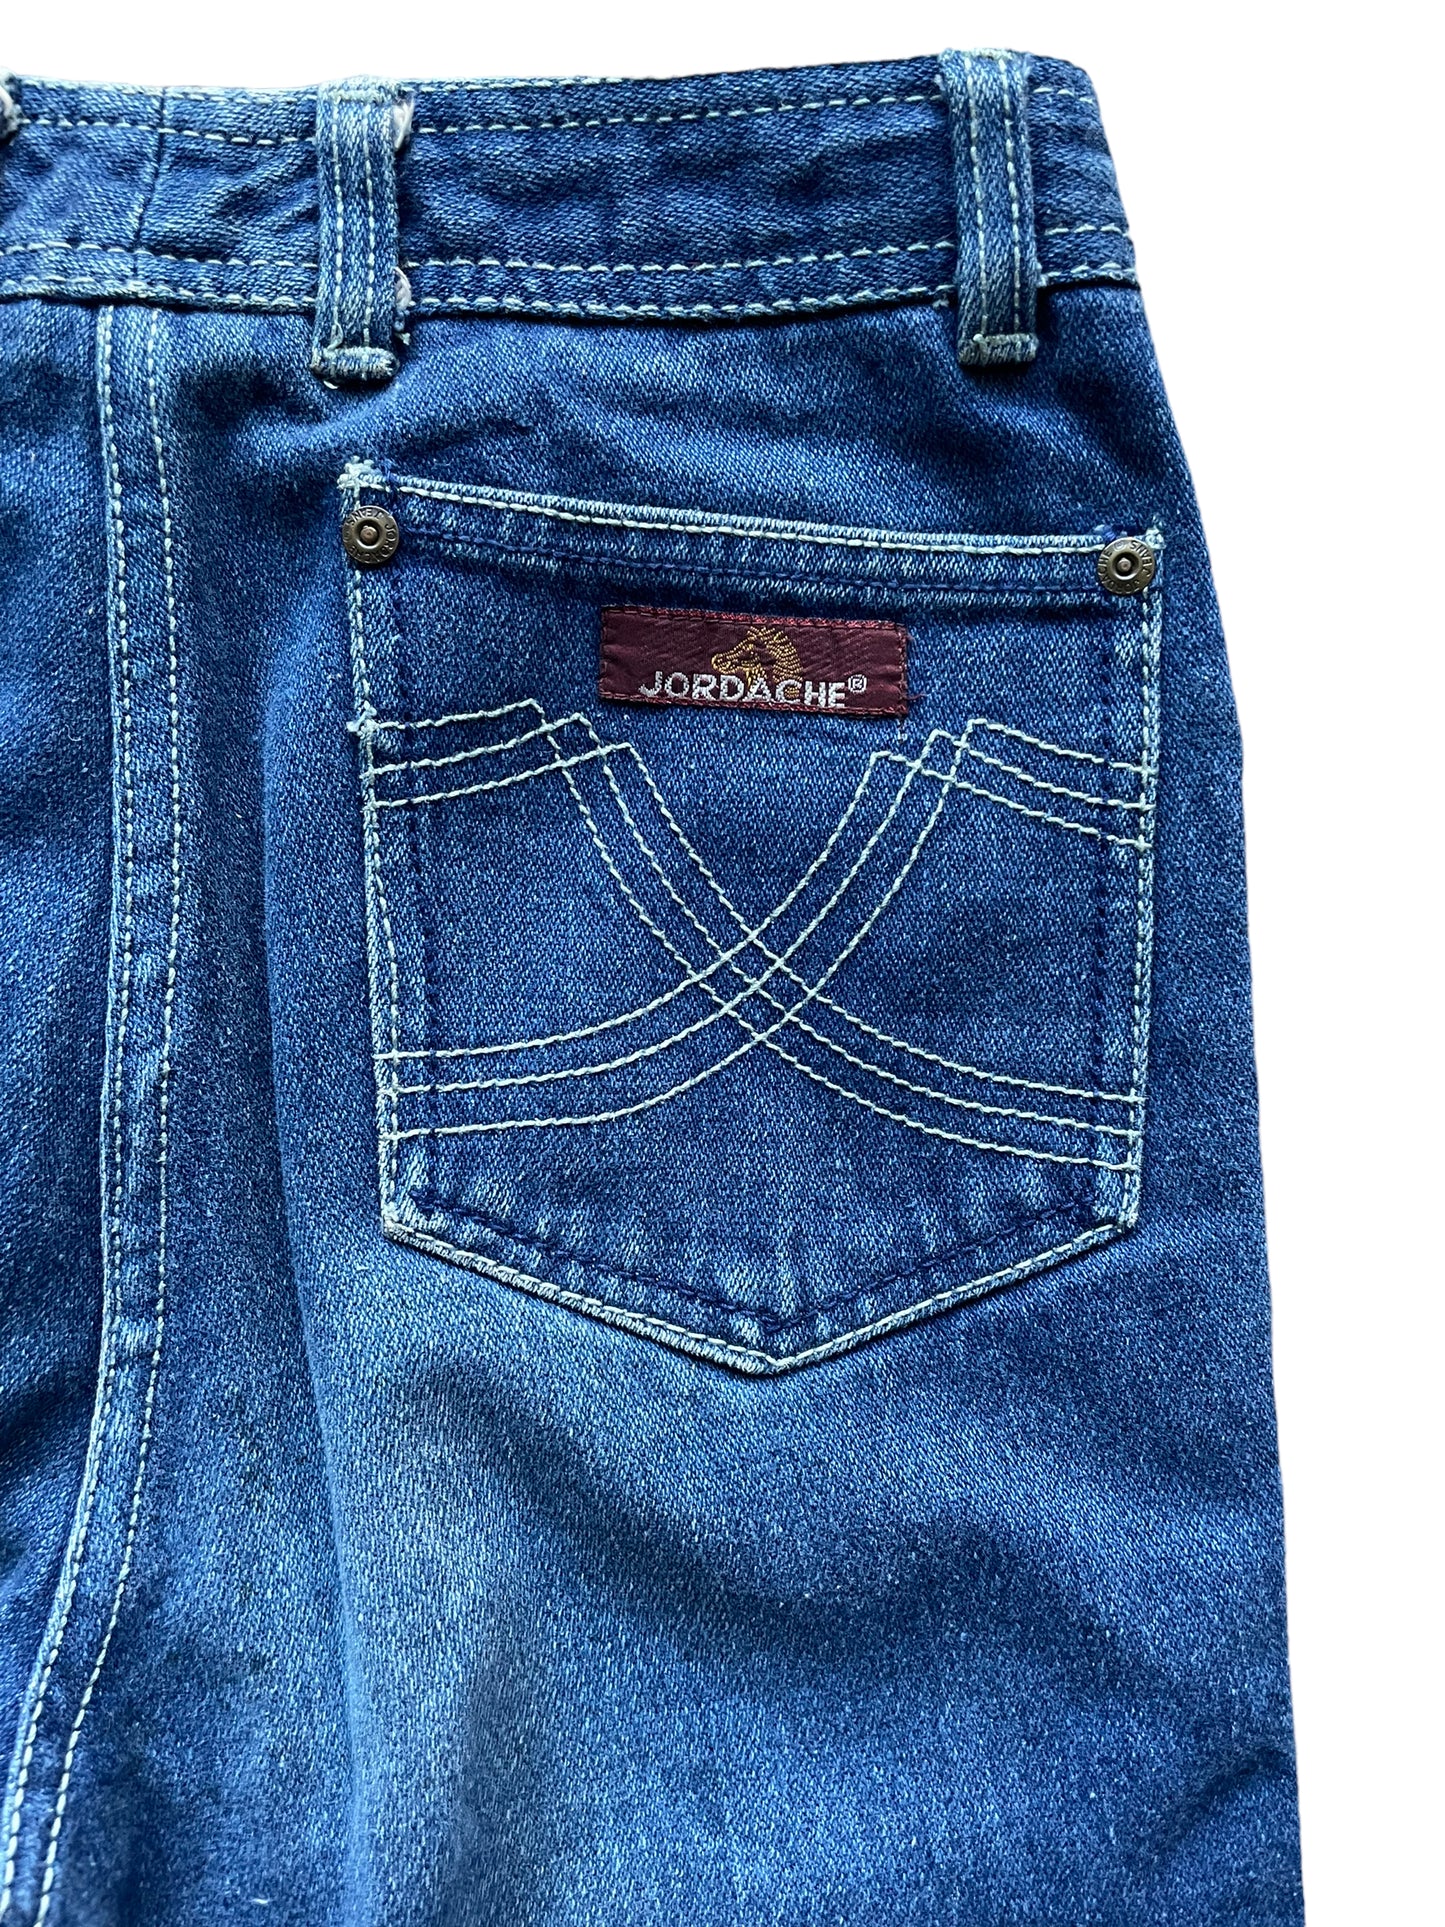 Right back pocket view of Vintage 1980s Jordache Jeans Sz SM 